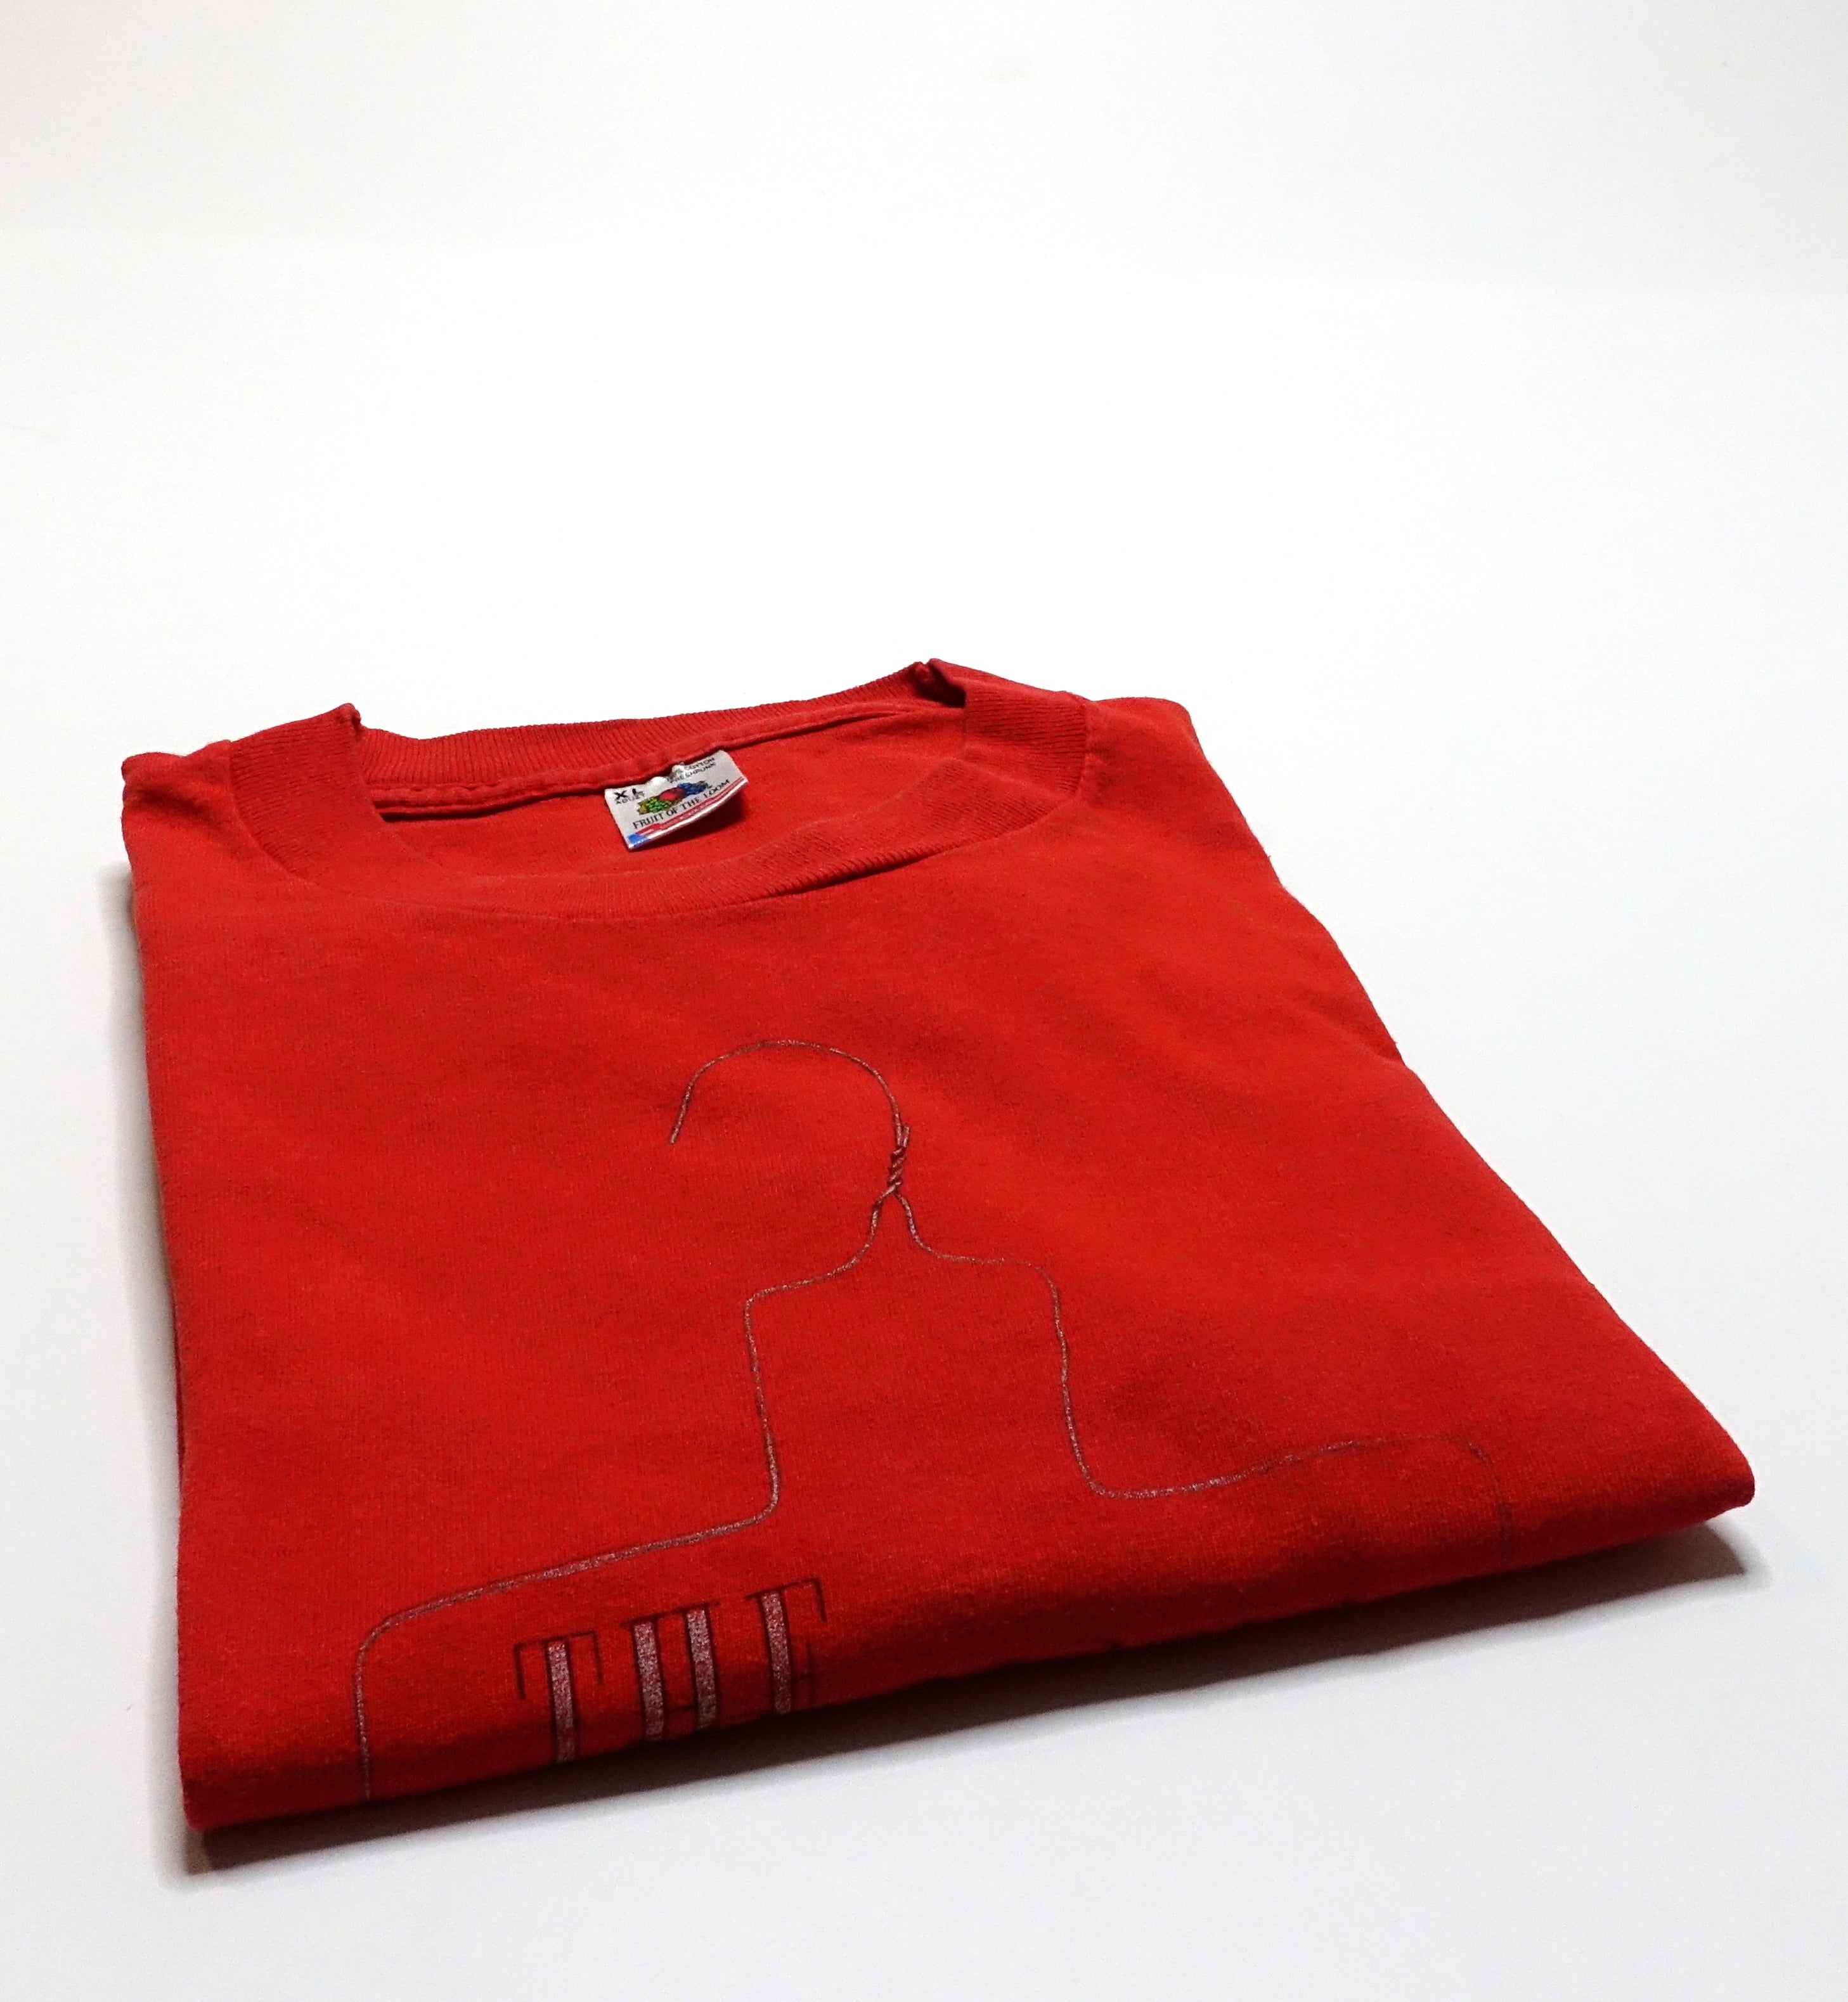 the Breeders - Coat Hanger Cross Long Sleeve Tour Shirt Size XL